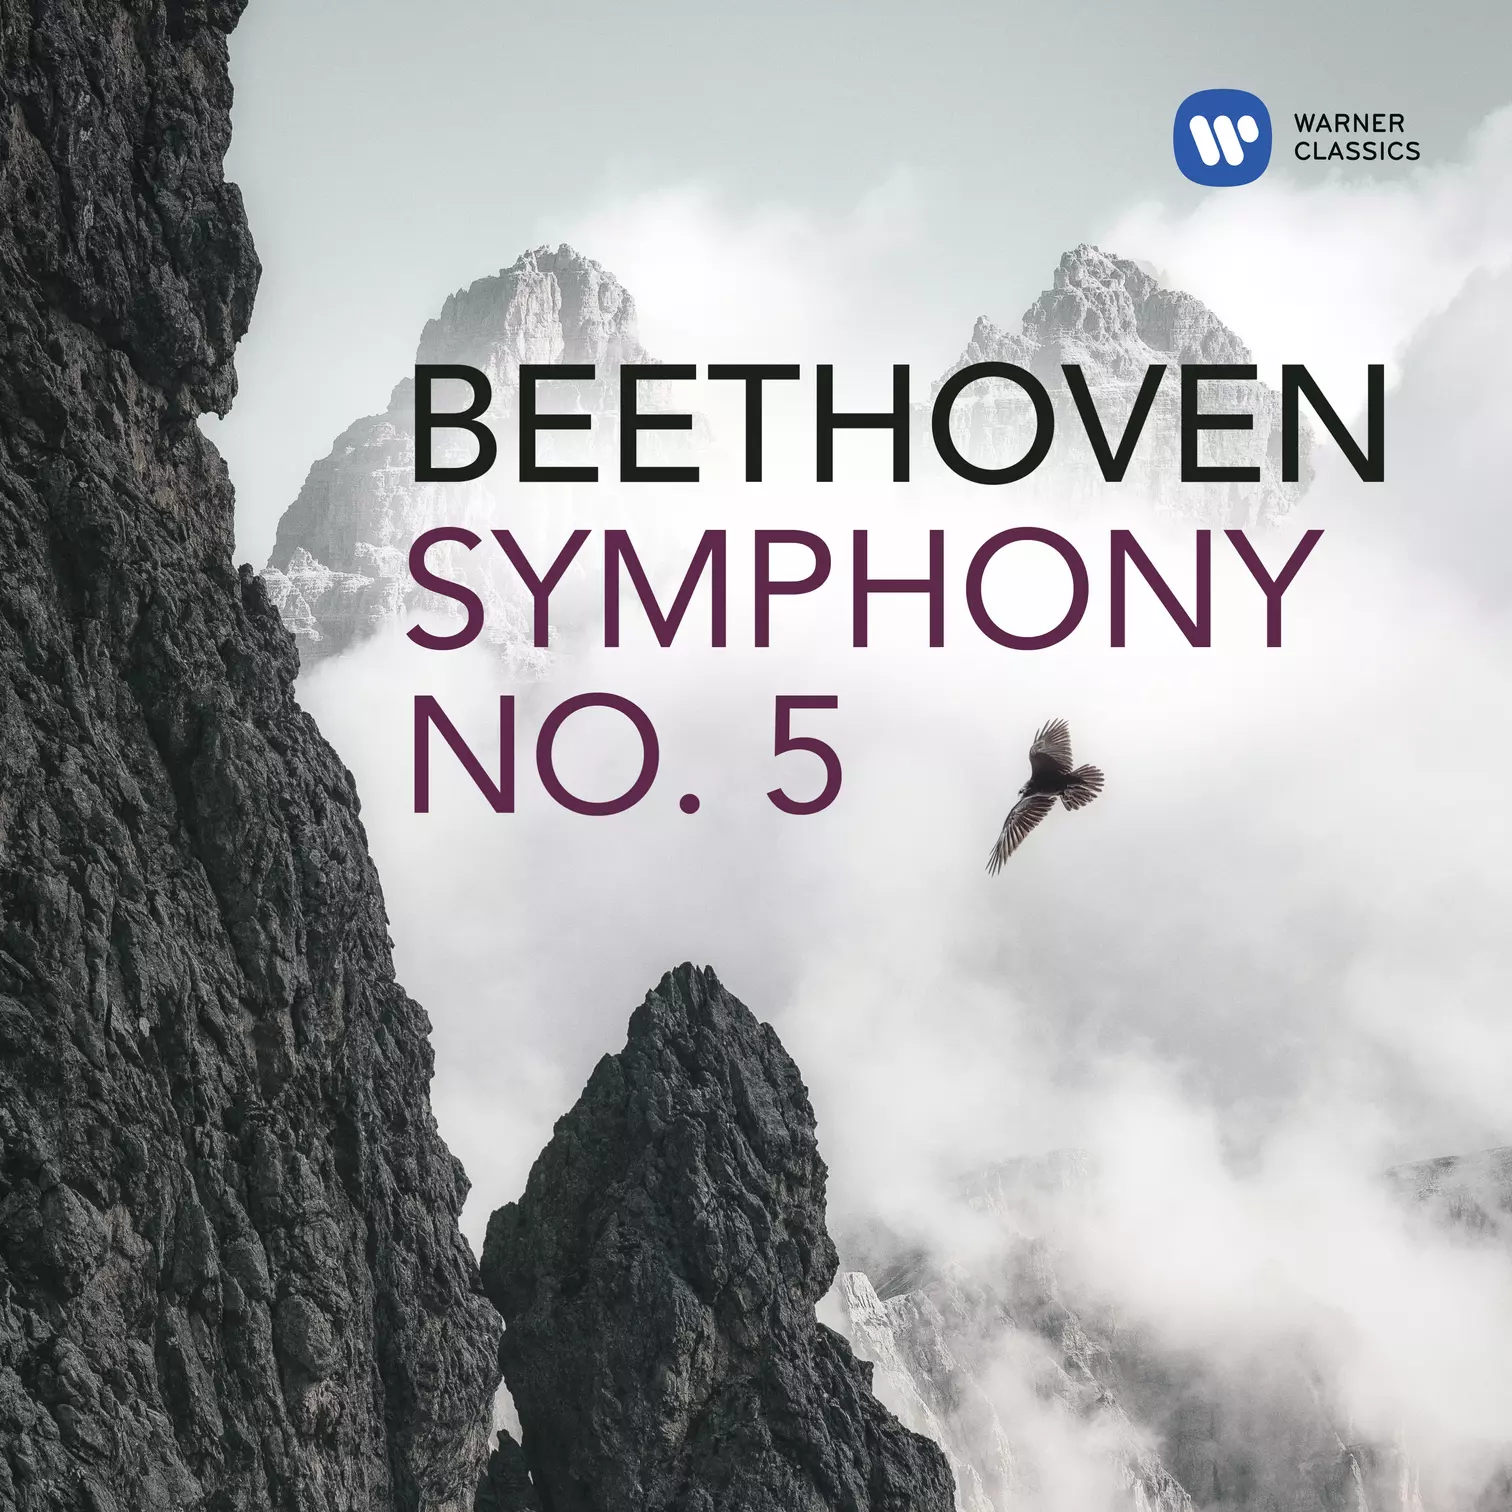 Beethoven: Symphony no 5 Kurt Masur New York Philharmonic